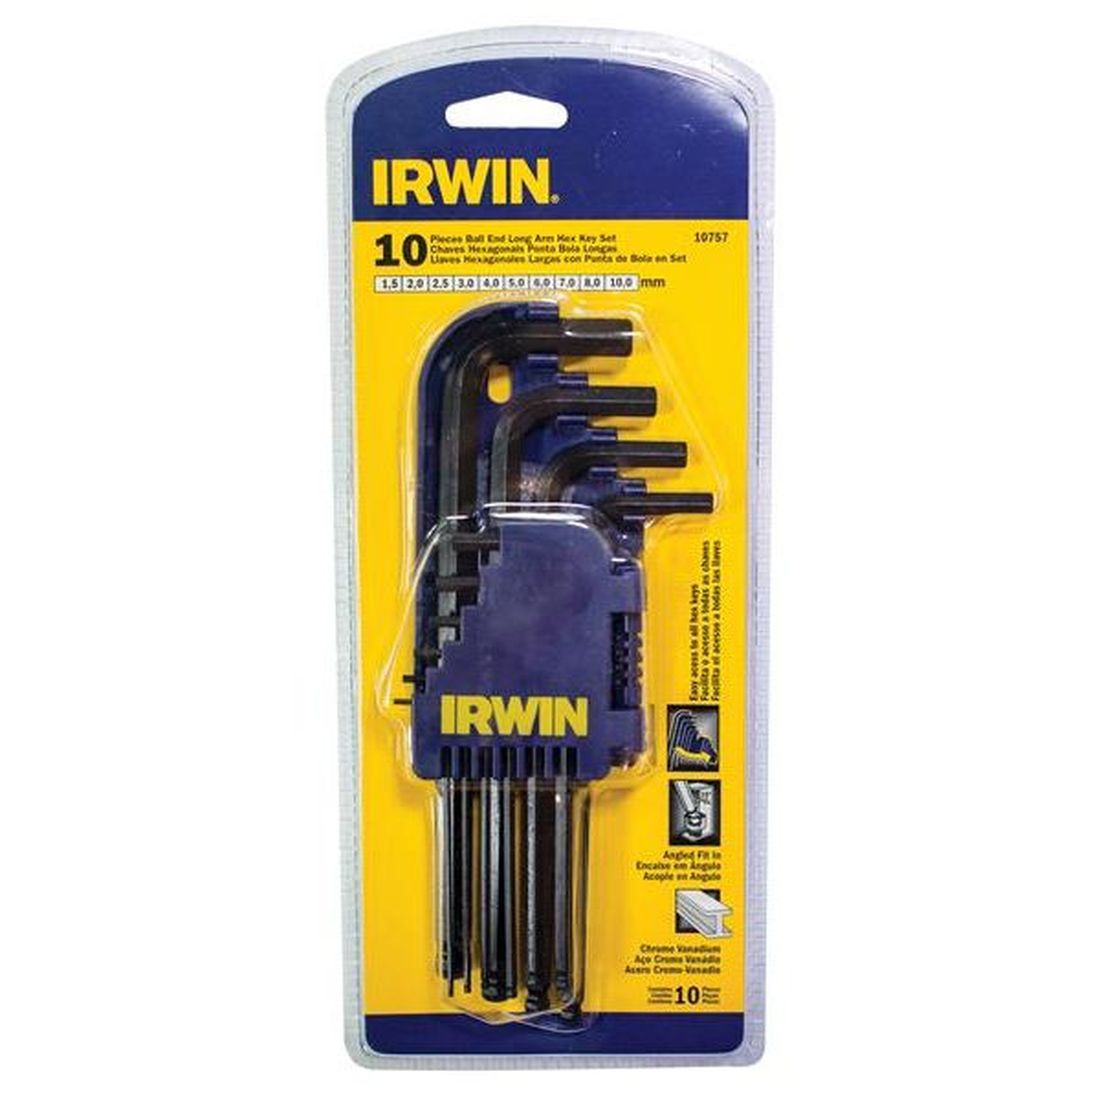 IRWIN T10757 Long Arm Ball End Hex Key Set, 10 Piece (1.5-10mm) HSS Hire